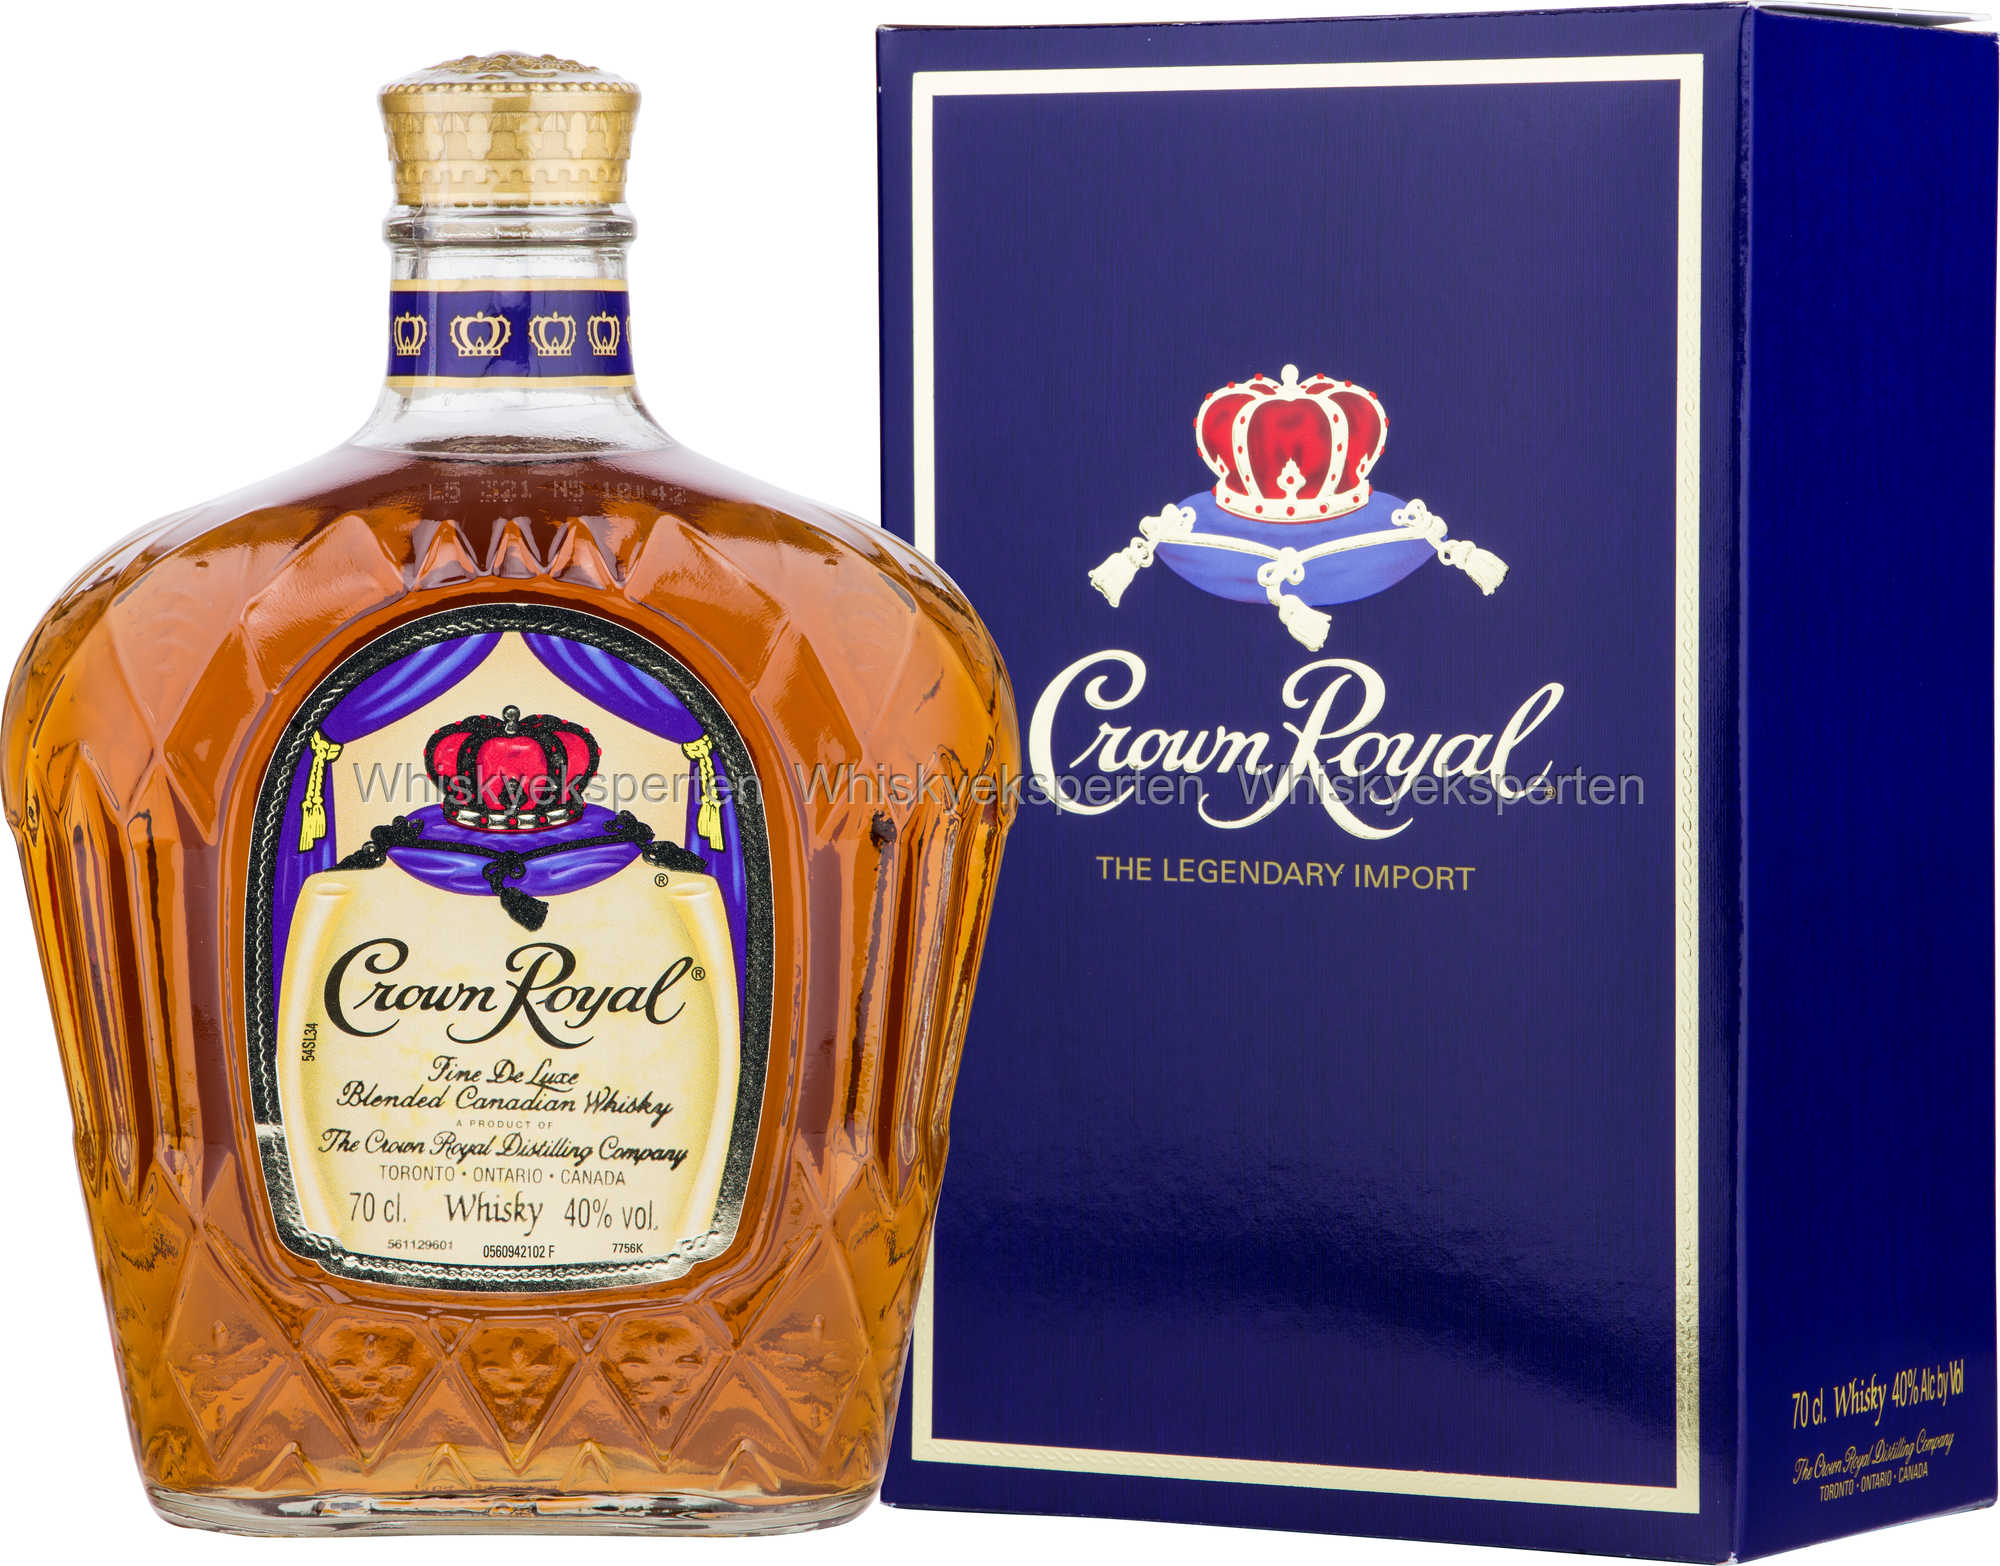 Crown Royal Canadisk Whisky.